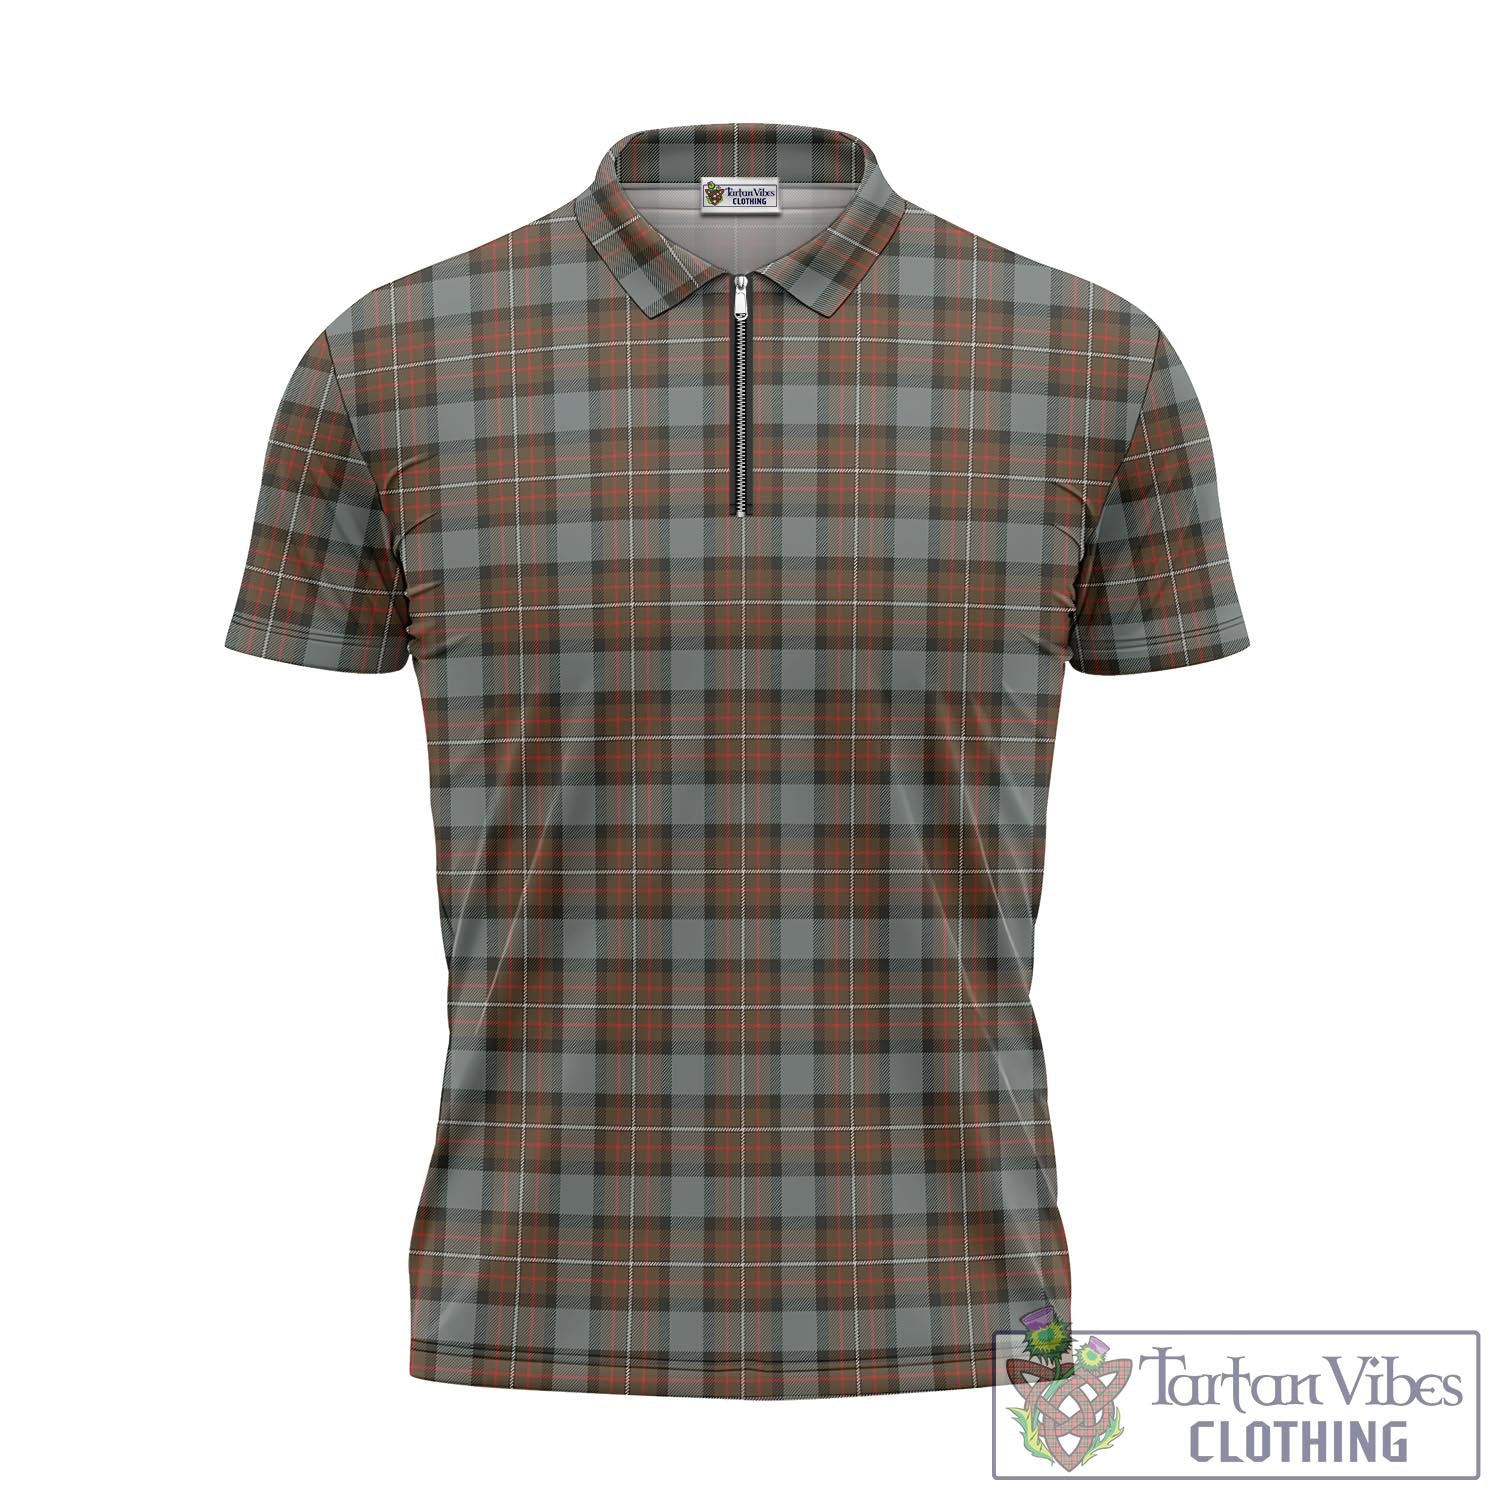 Tartan Vibes Clothing Ferguson Weathered Tartan Zipper Polo Shirt